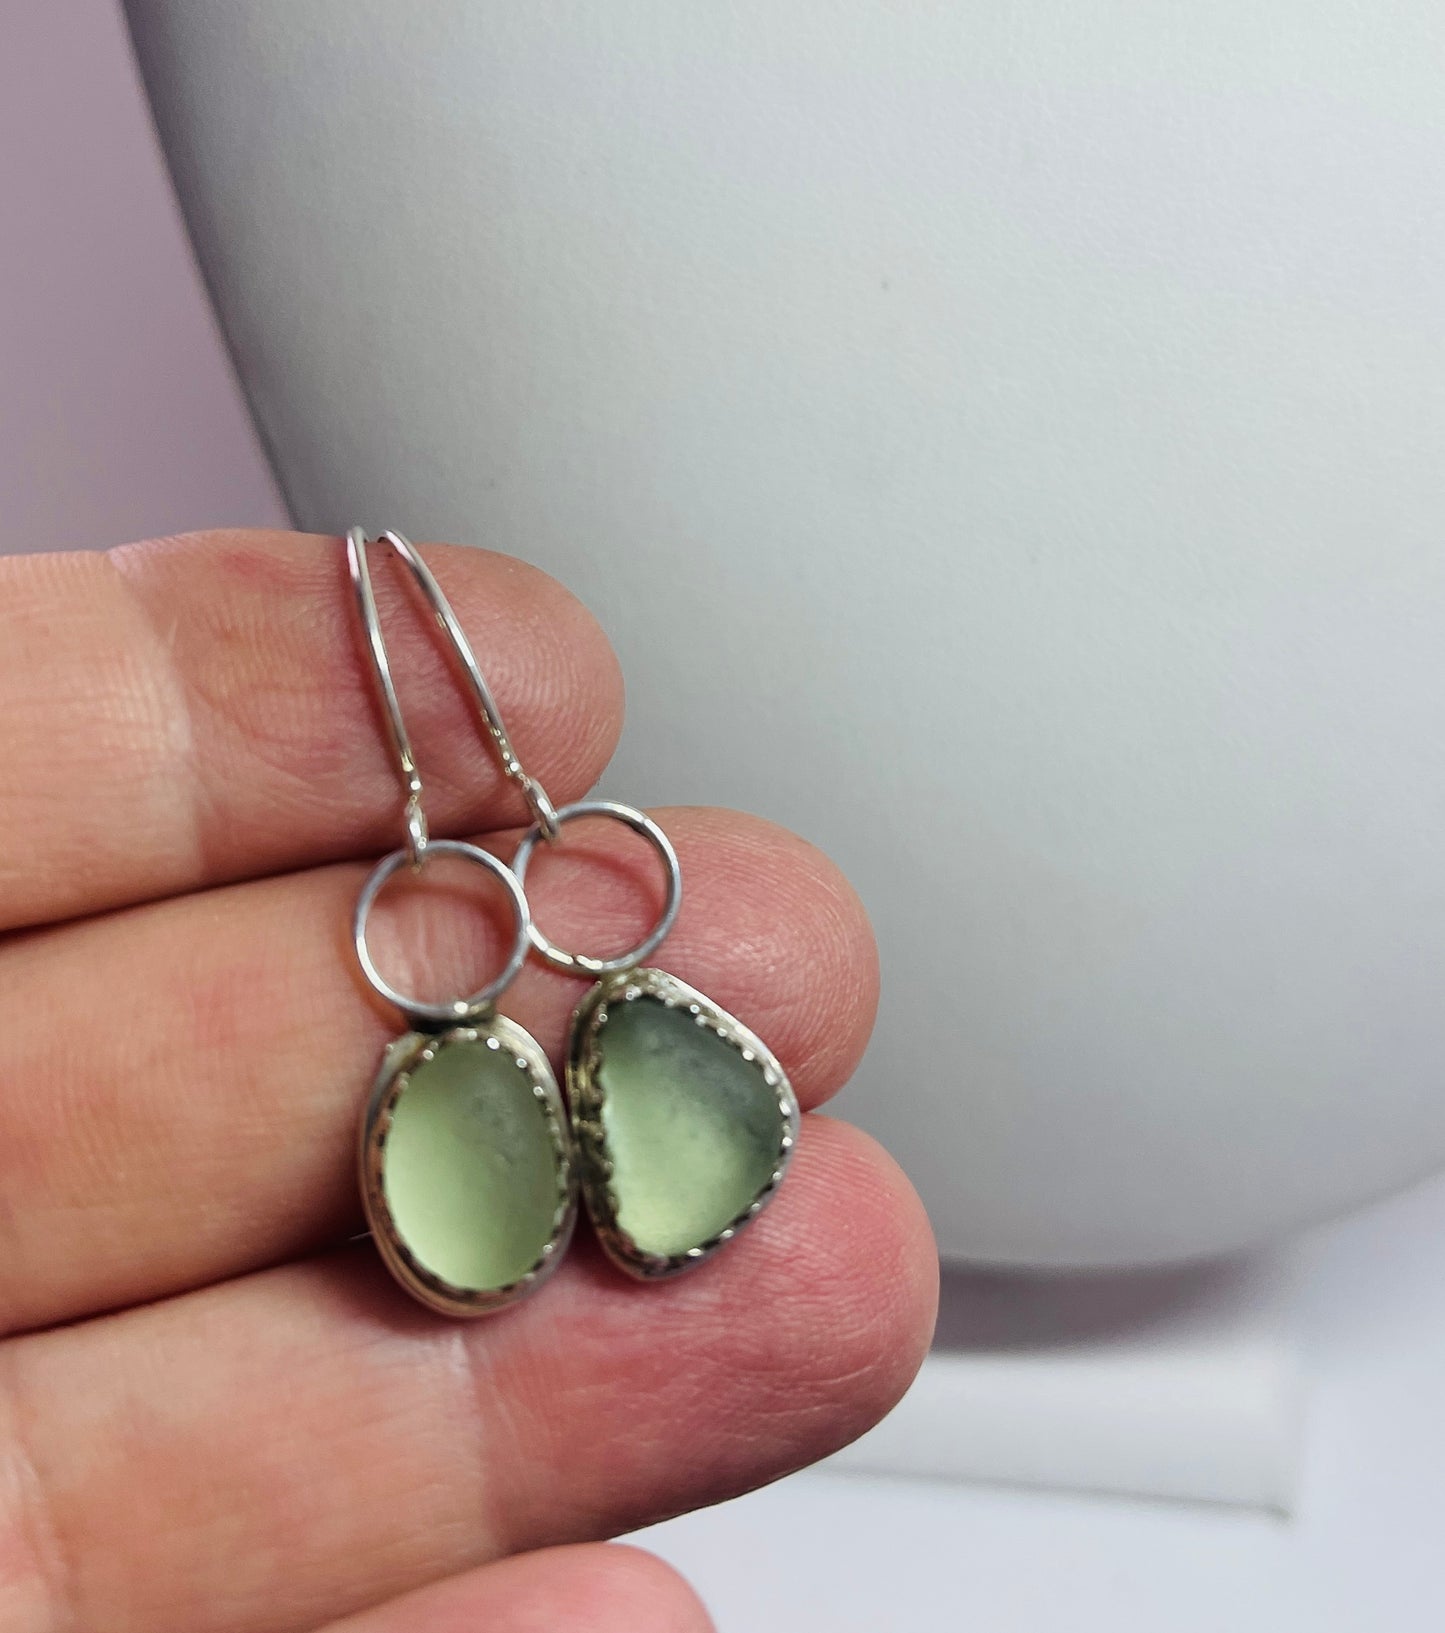 Green seafoam seaglass and silver earrings